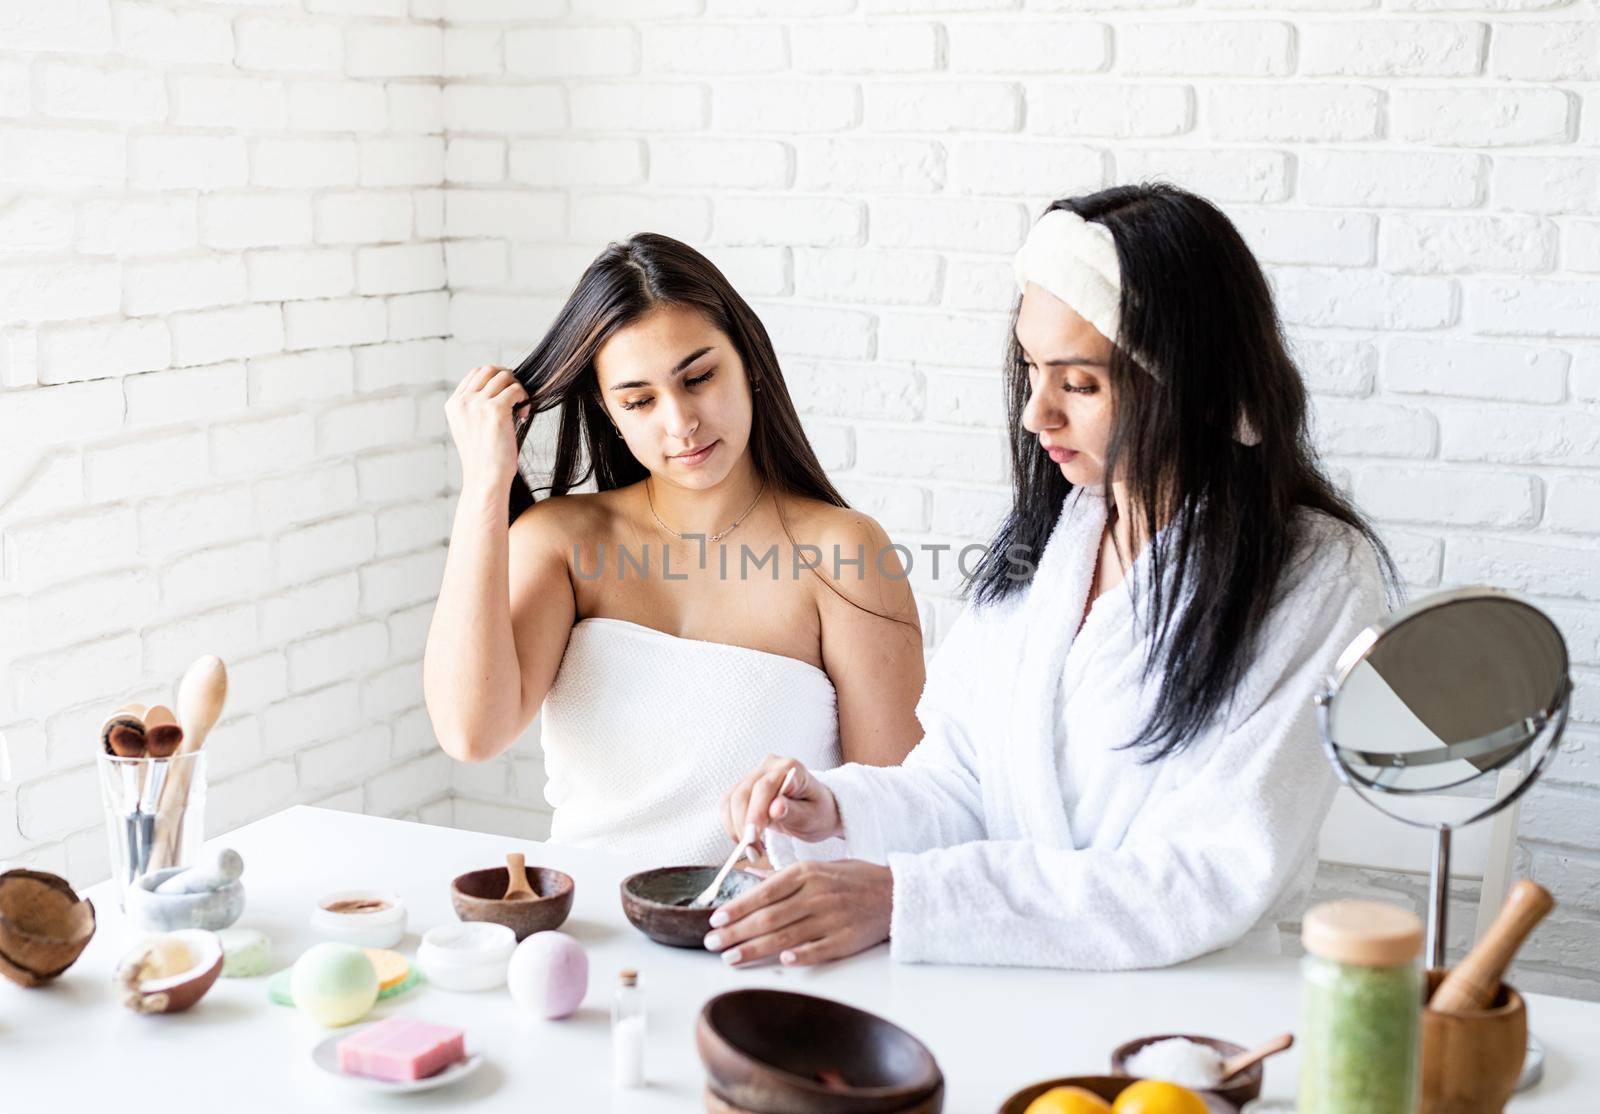 women hands making facial mask doing spa procedures by Desperada